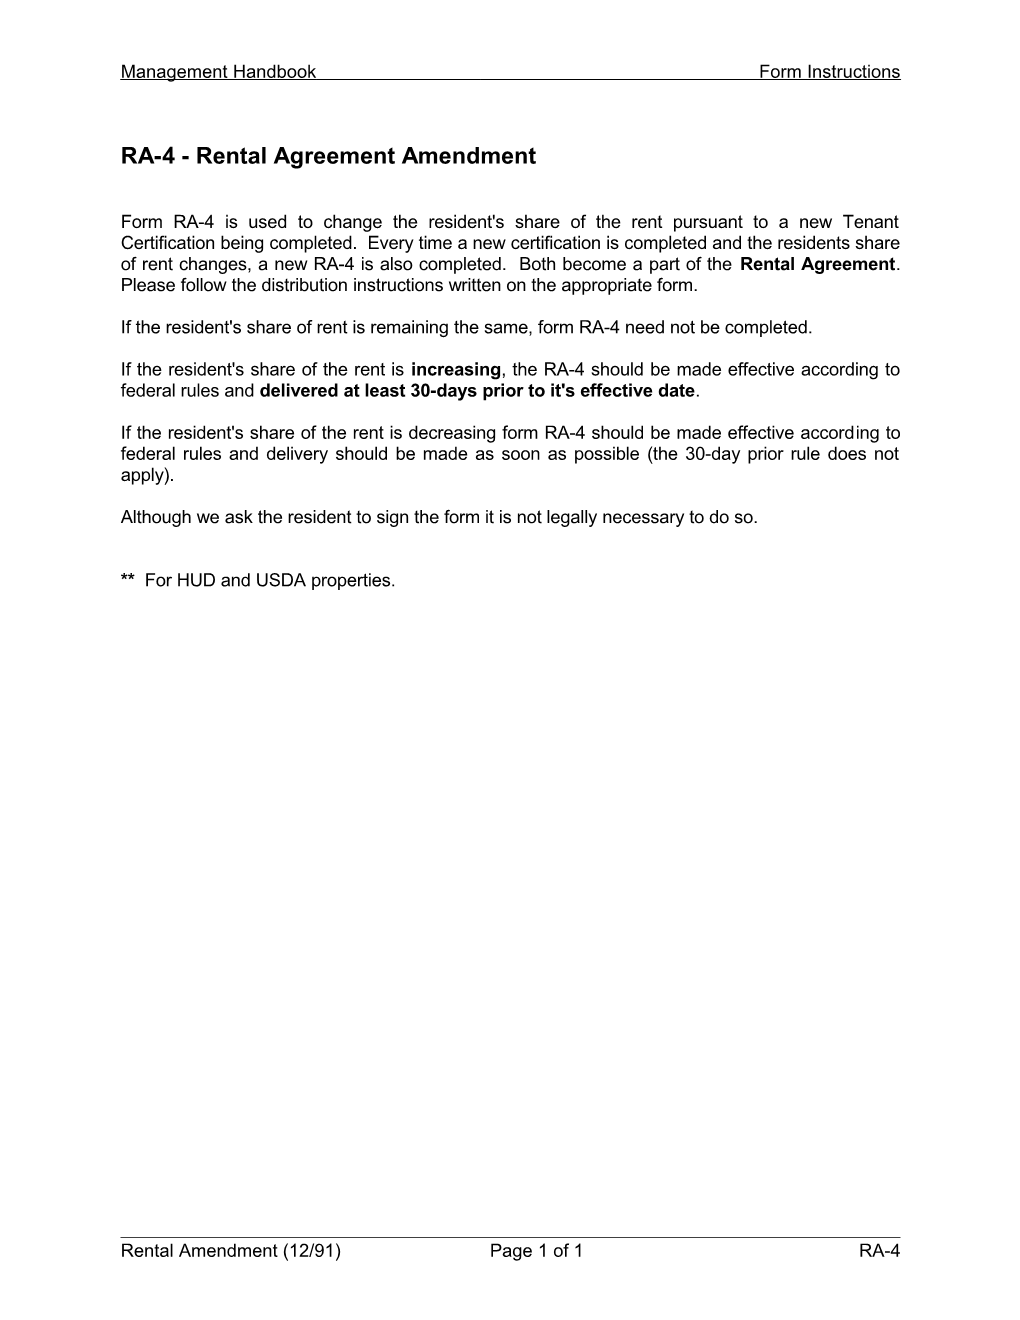 RA-4 - Rental Agreement Amendment